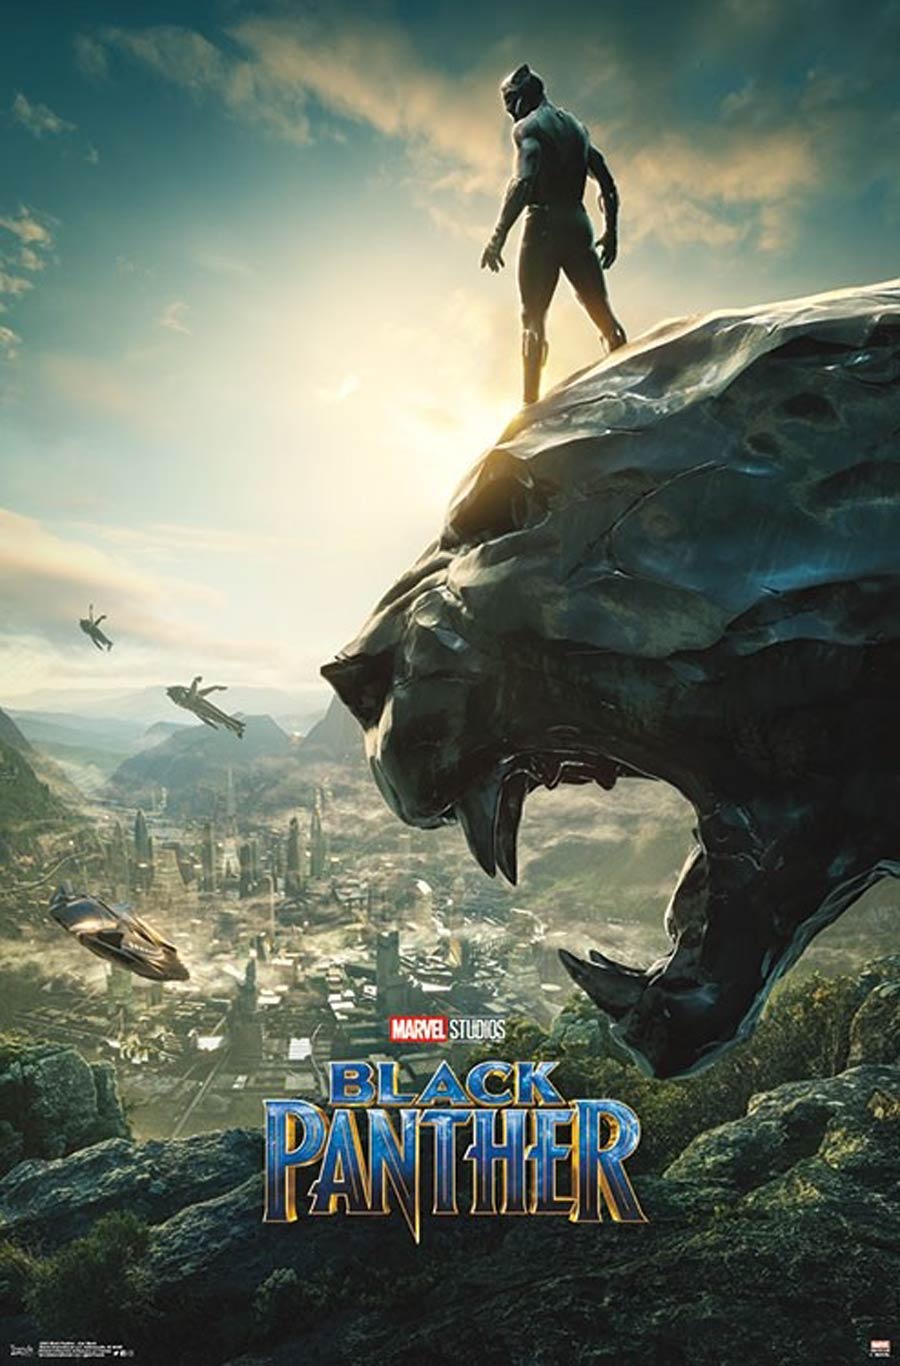 Black Panther One Sheet Poster